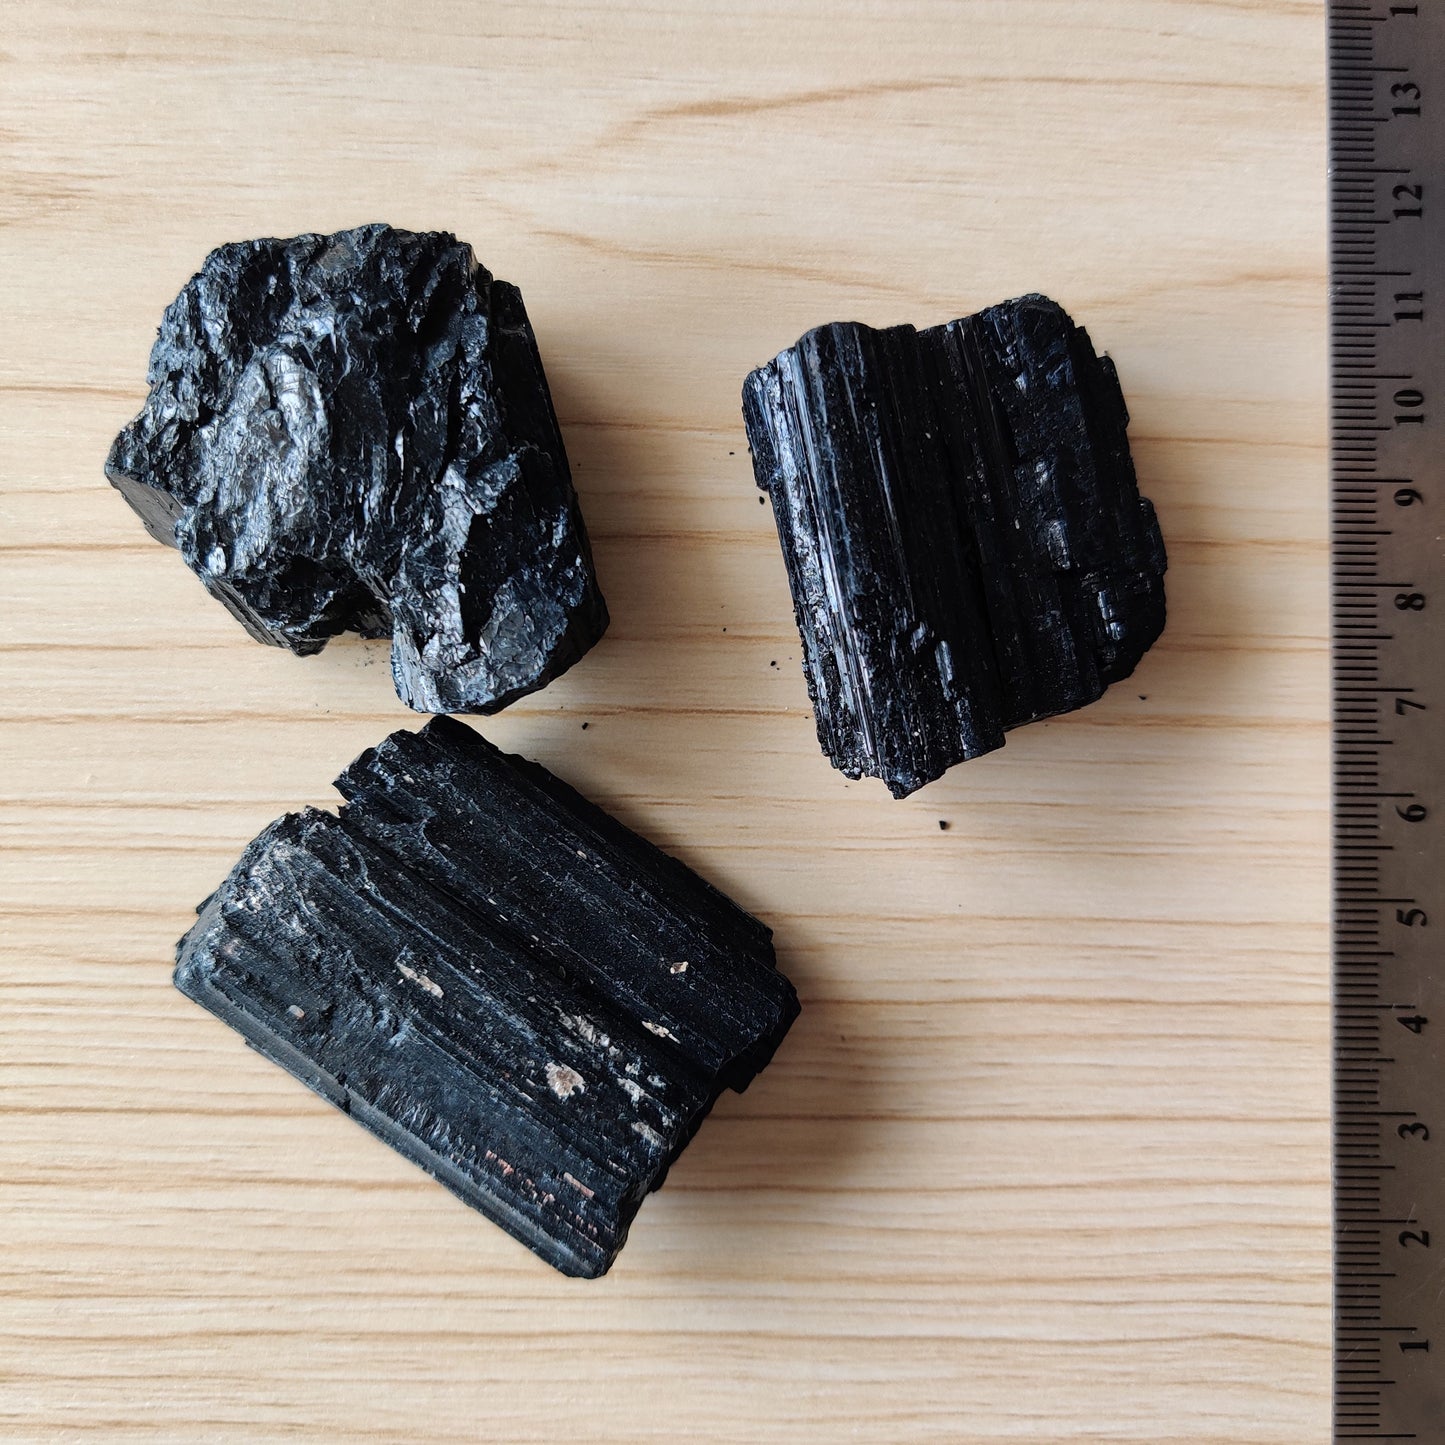 Black Tourmaline Crystal Piece (3-5 cm) - Rivendell Shop